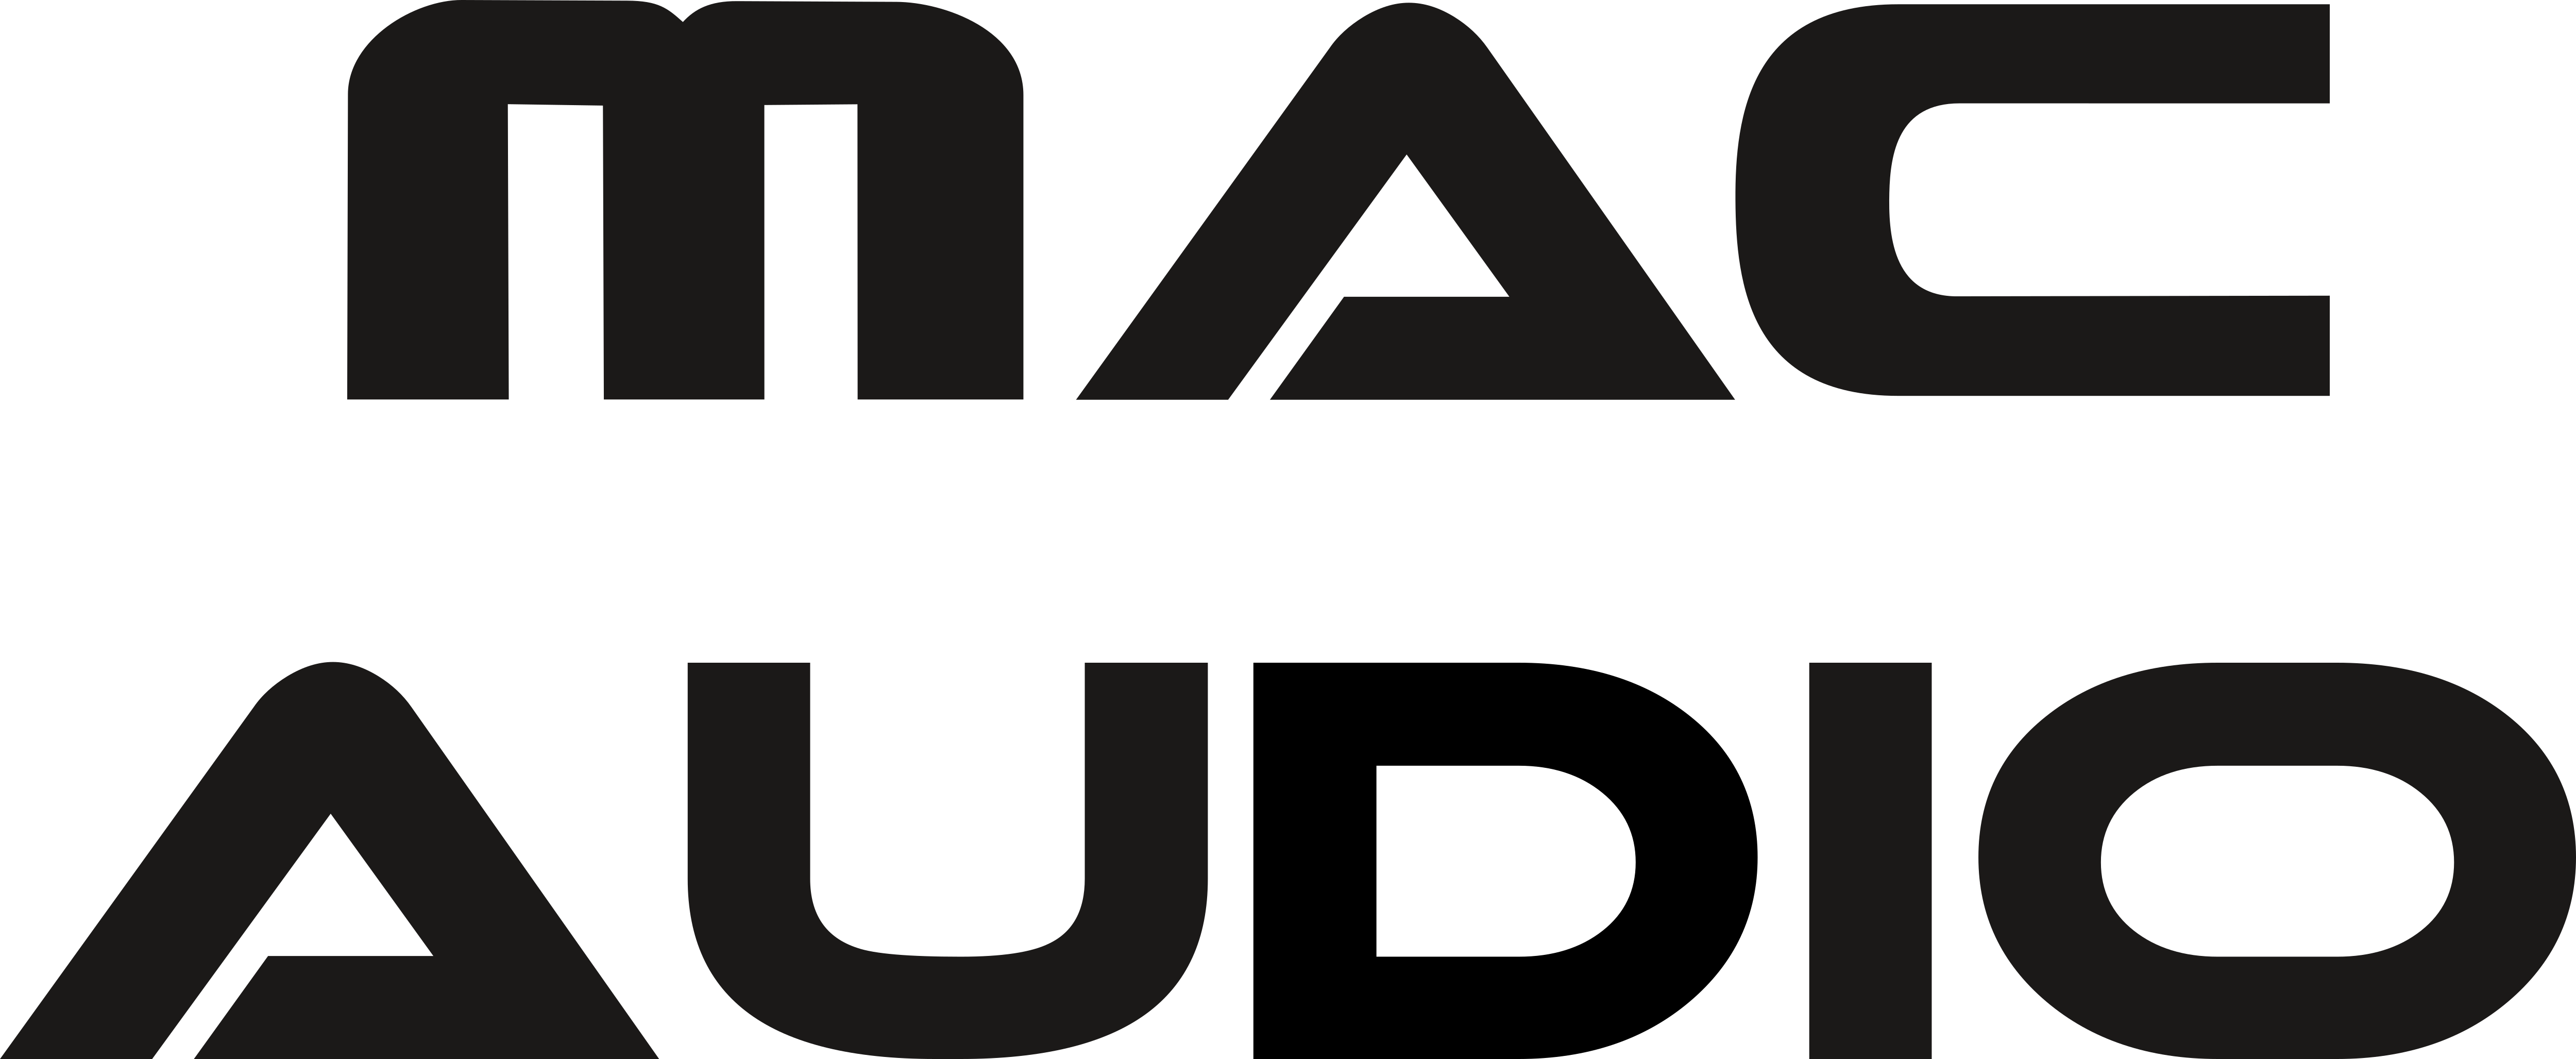 Mac Audio Logos Download